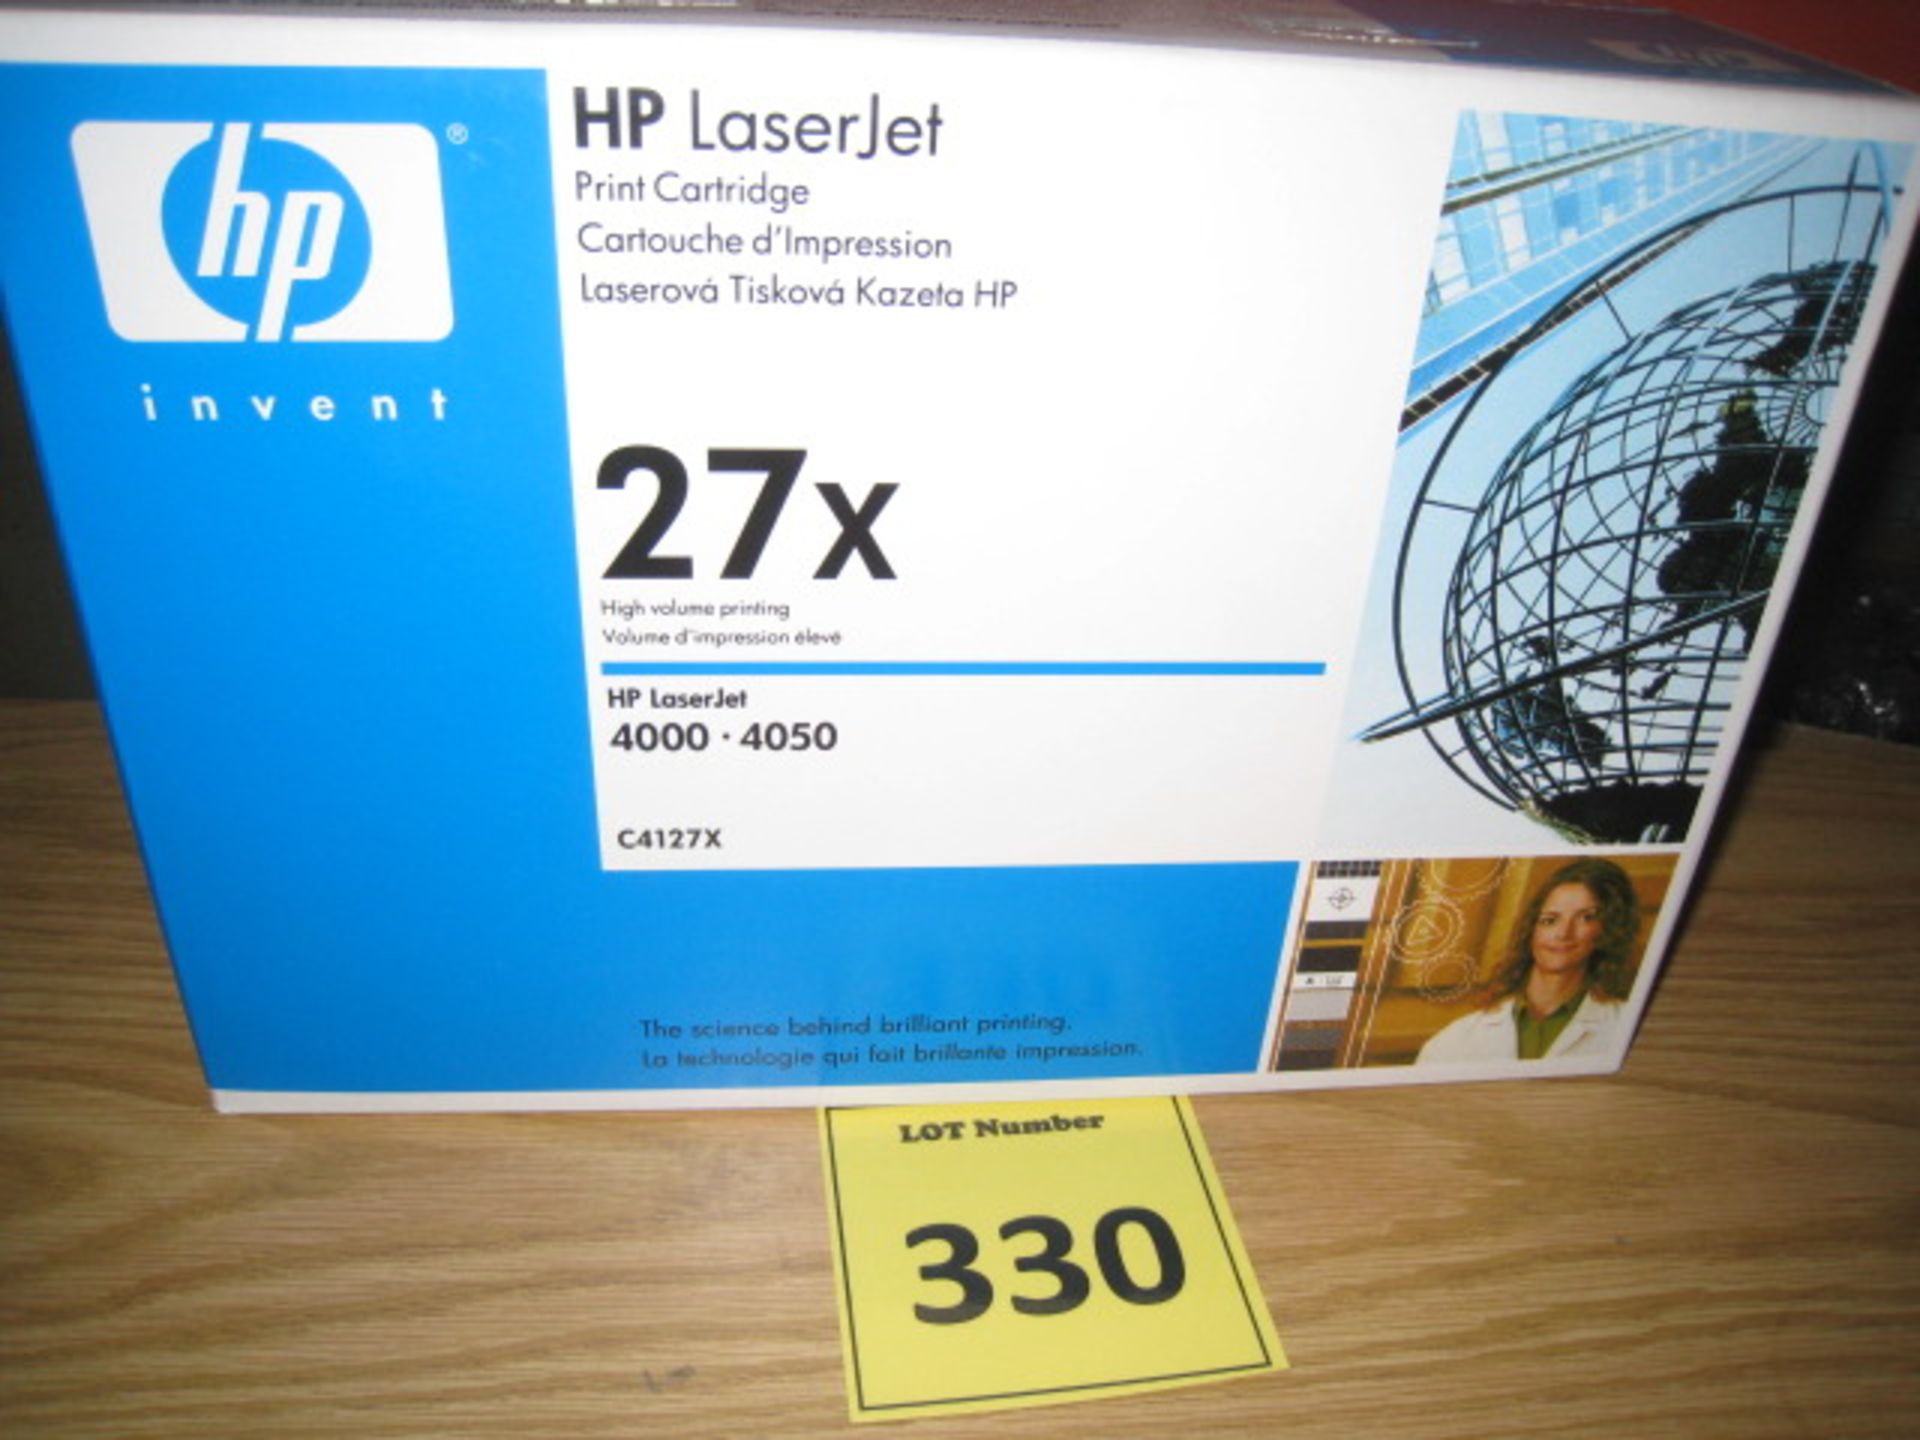 GENUINE ORIGINAL HP BLACK TONER CARTRIDGE C4127X FOR HP LASERJET 4000/4050